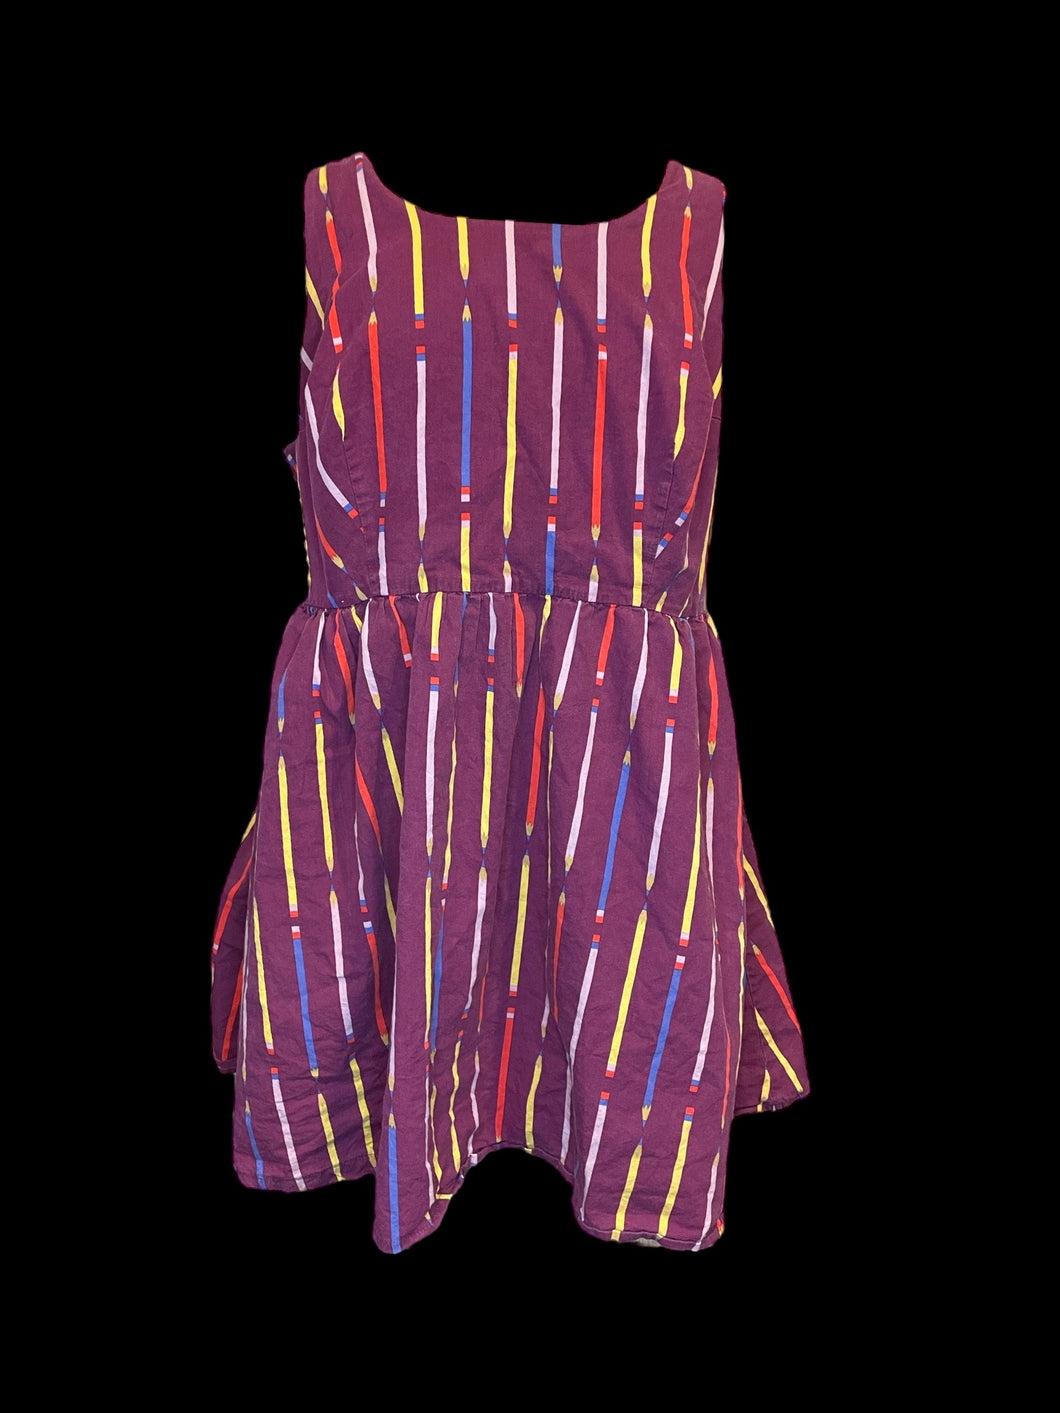 XL Plum & multicolor pencil pattern sleeveless round neckline knee length dress w/ pockets, & clasp/zipper closure